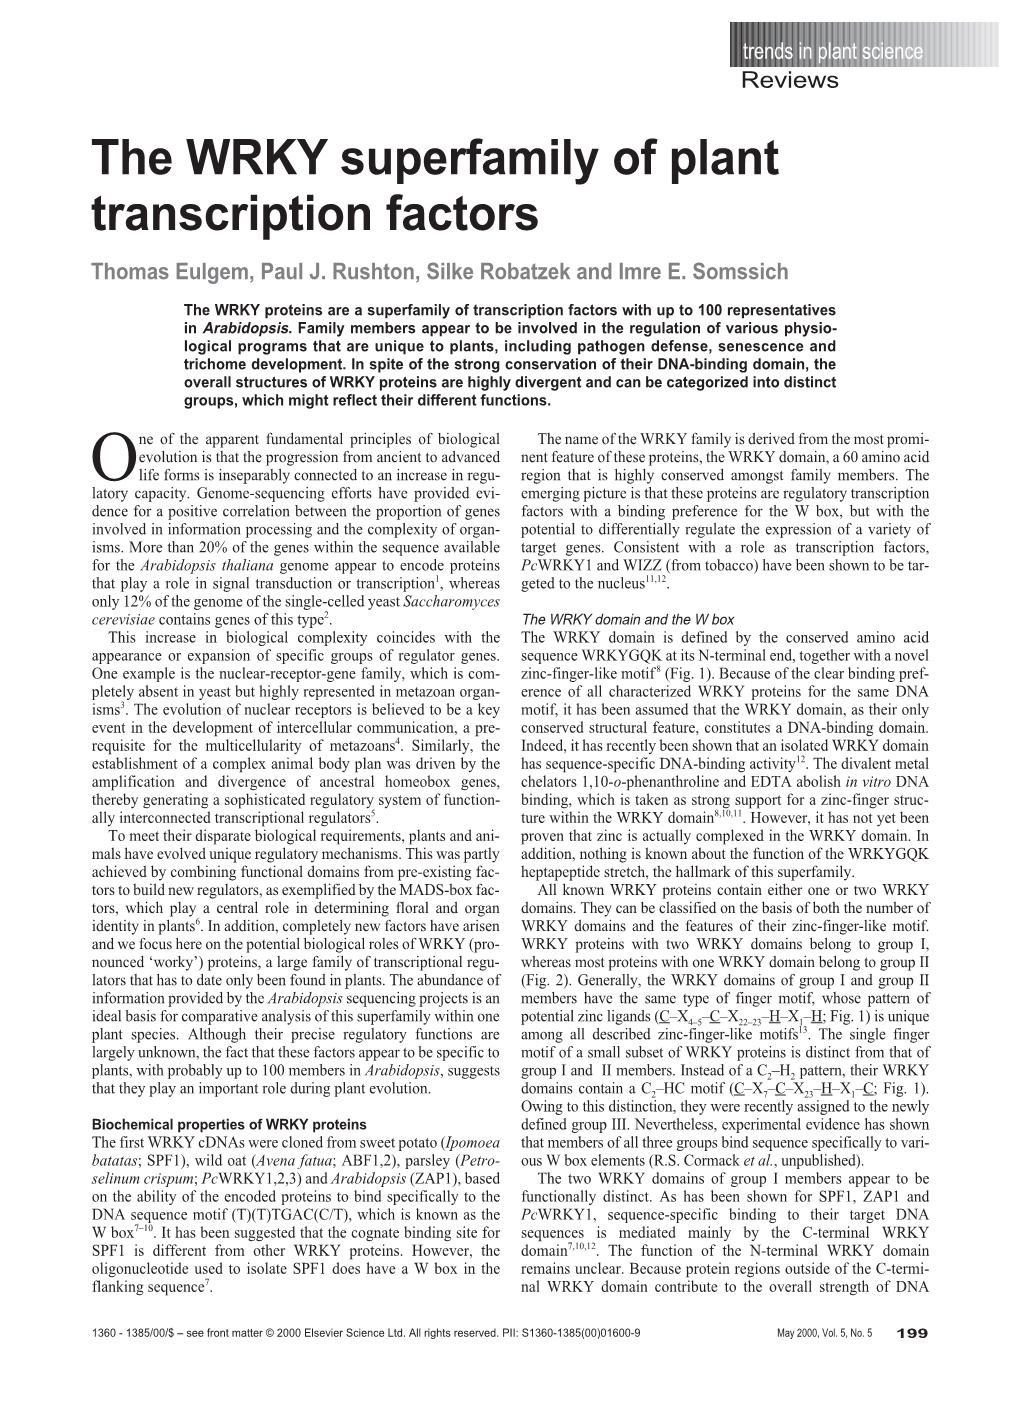 The WRKY Superfamily of Plant Transcription Factors Thomas Eulgem, Paul J